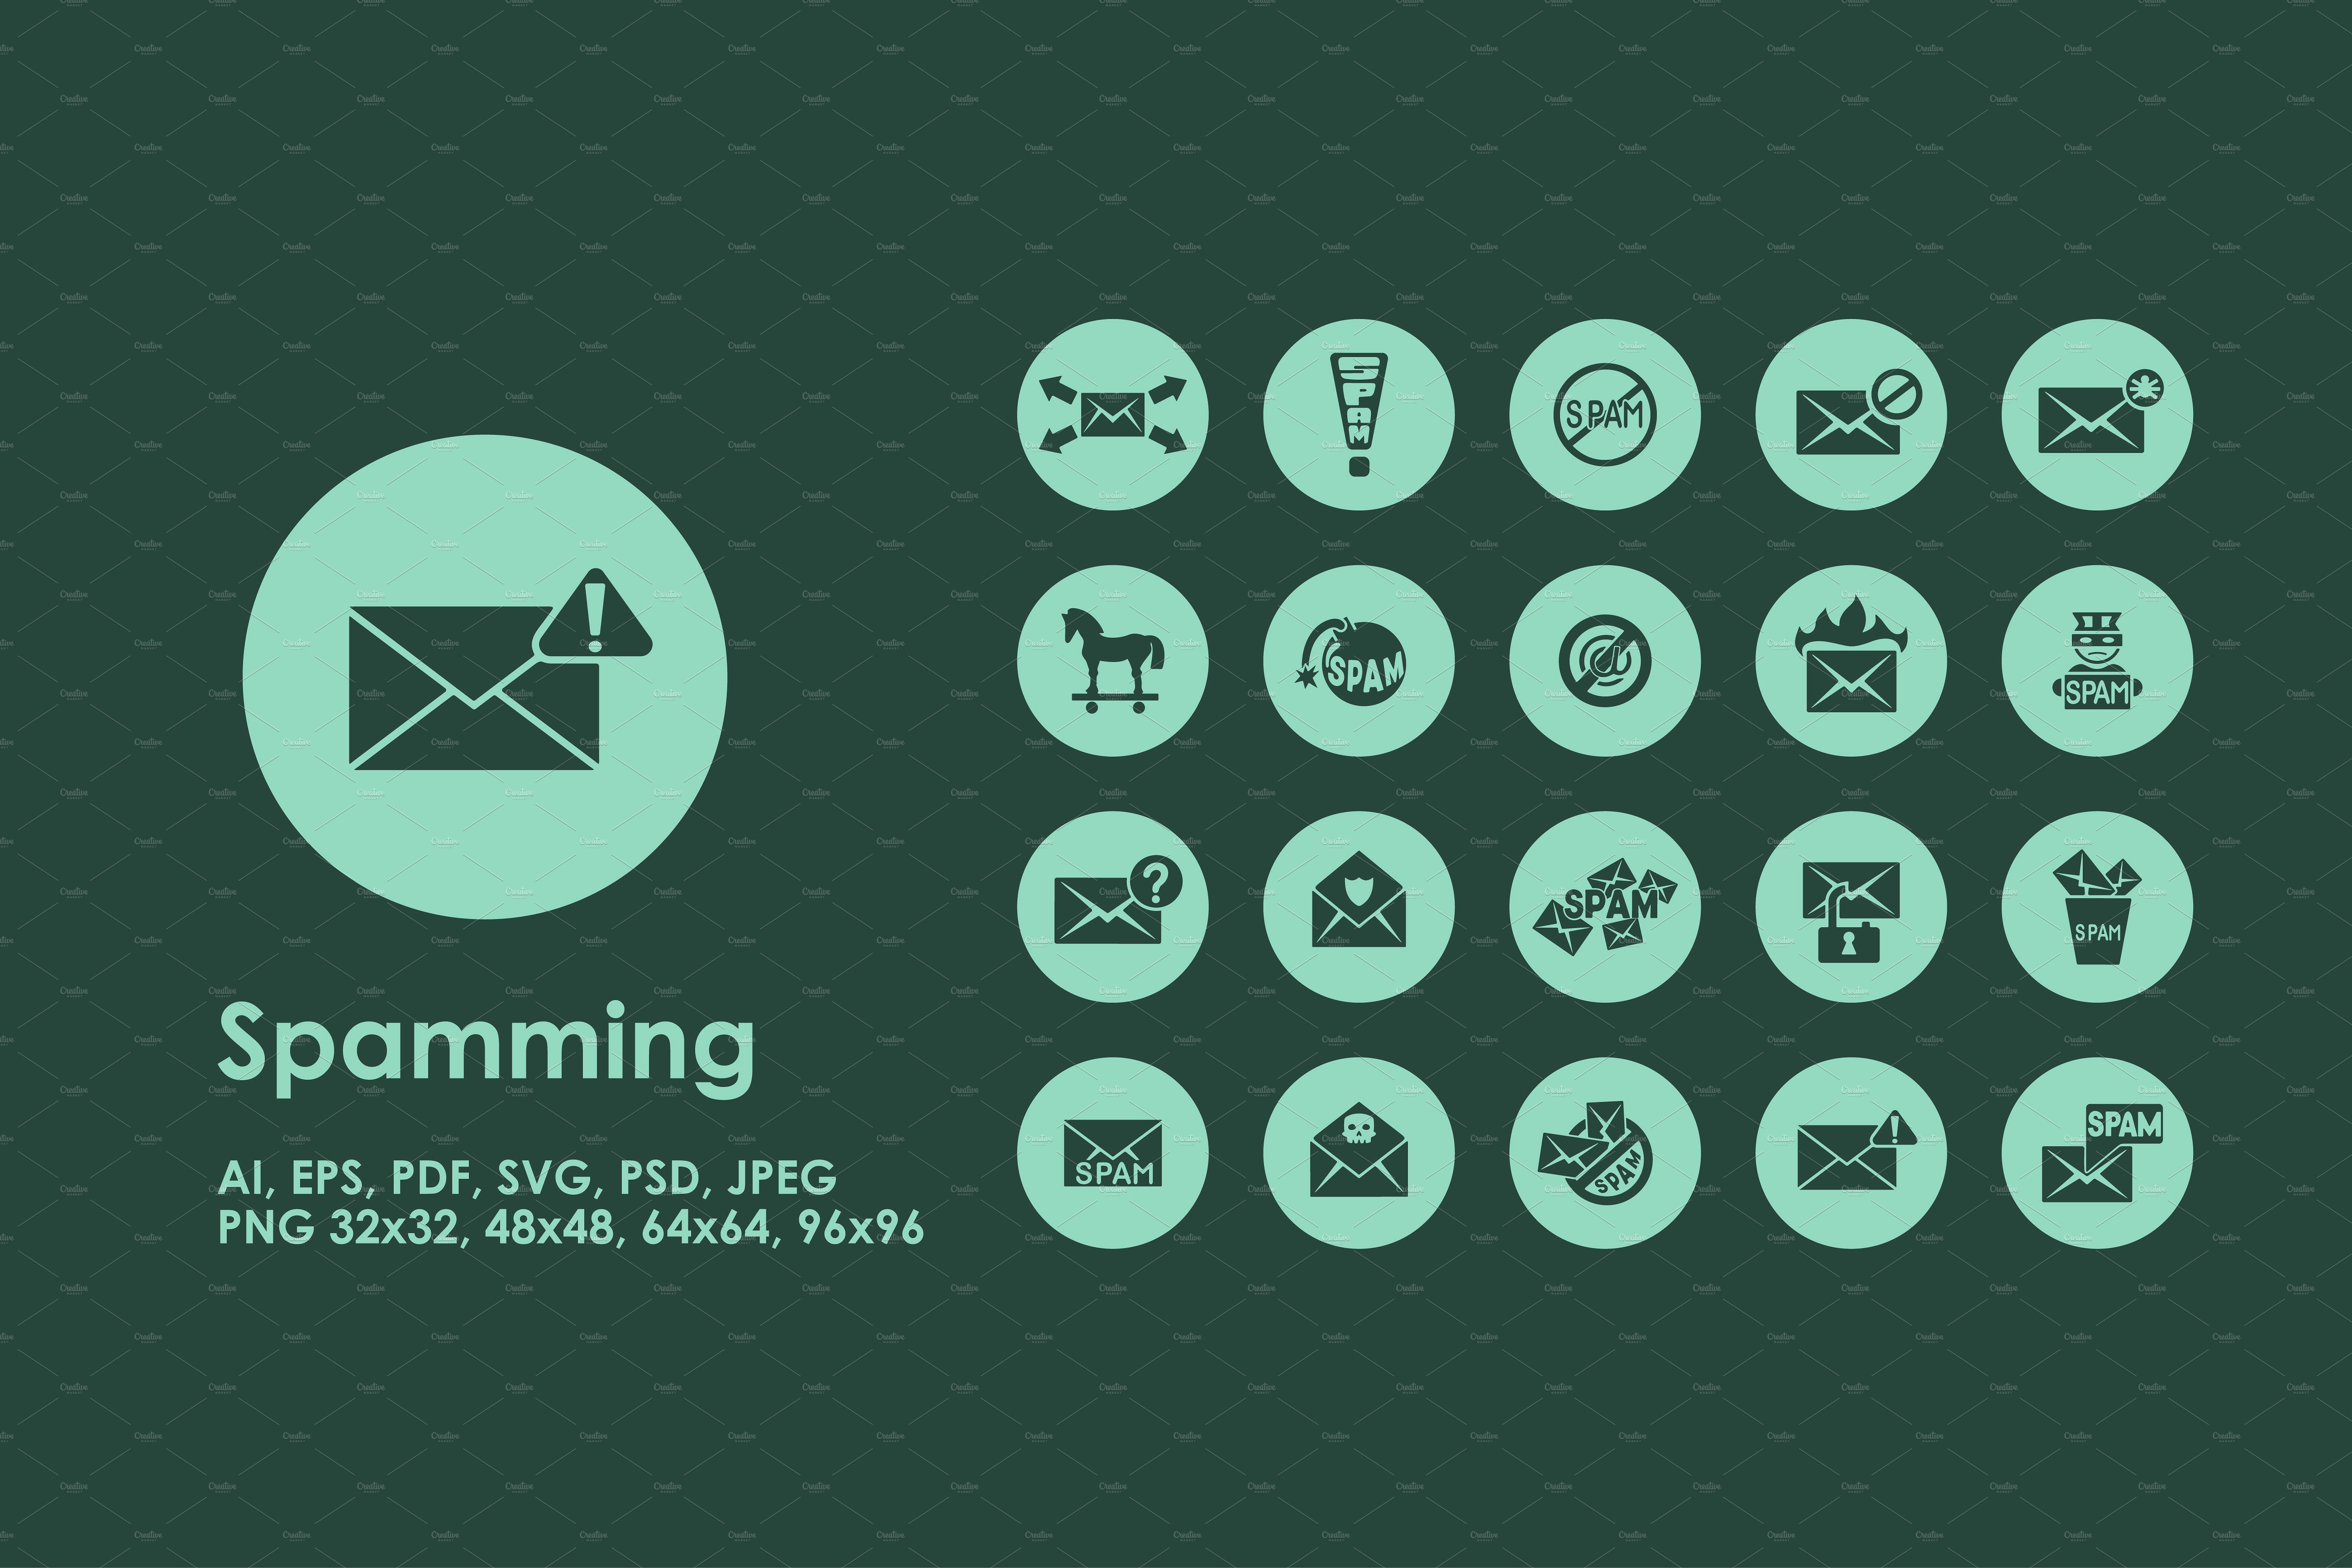 邮件处理主题图标 Spamming simple icons插图